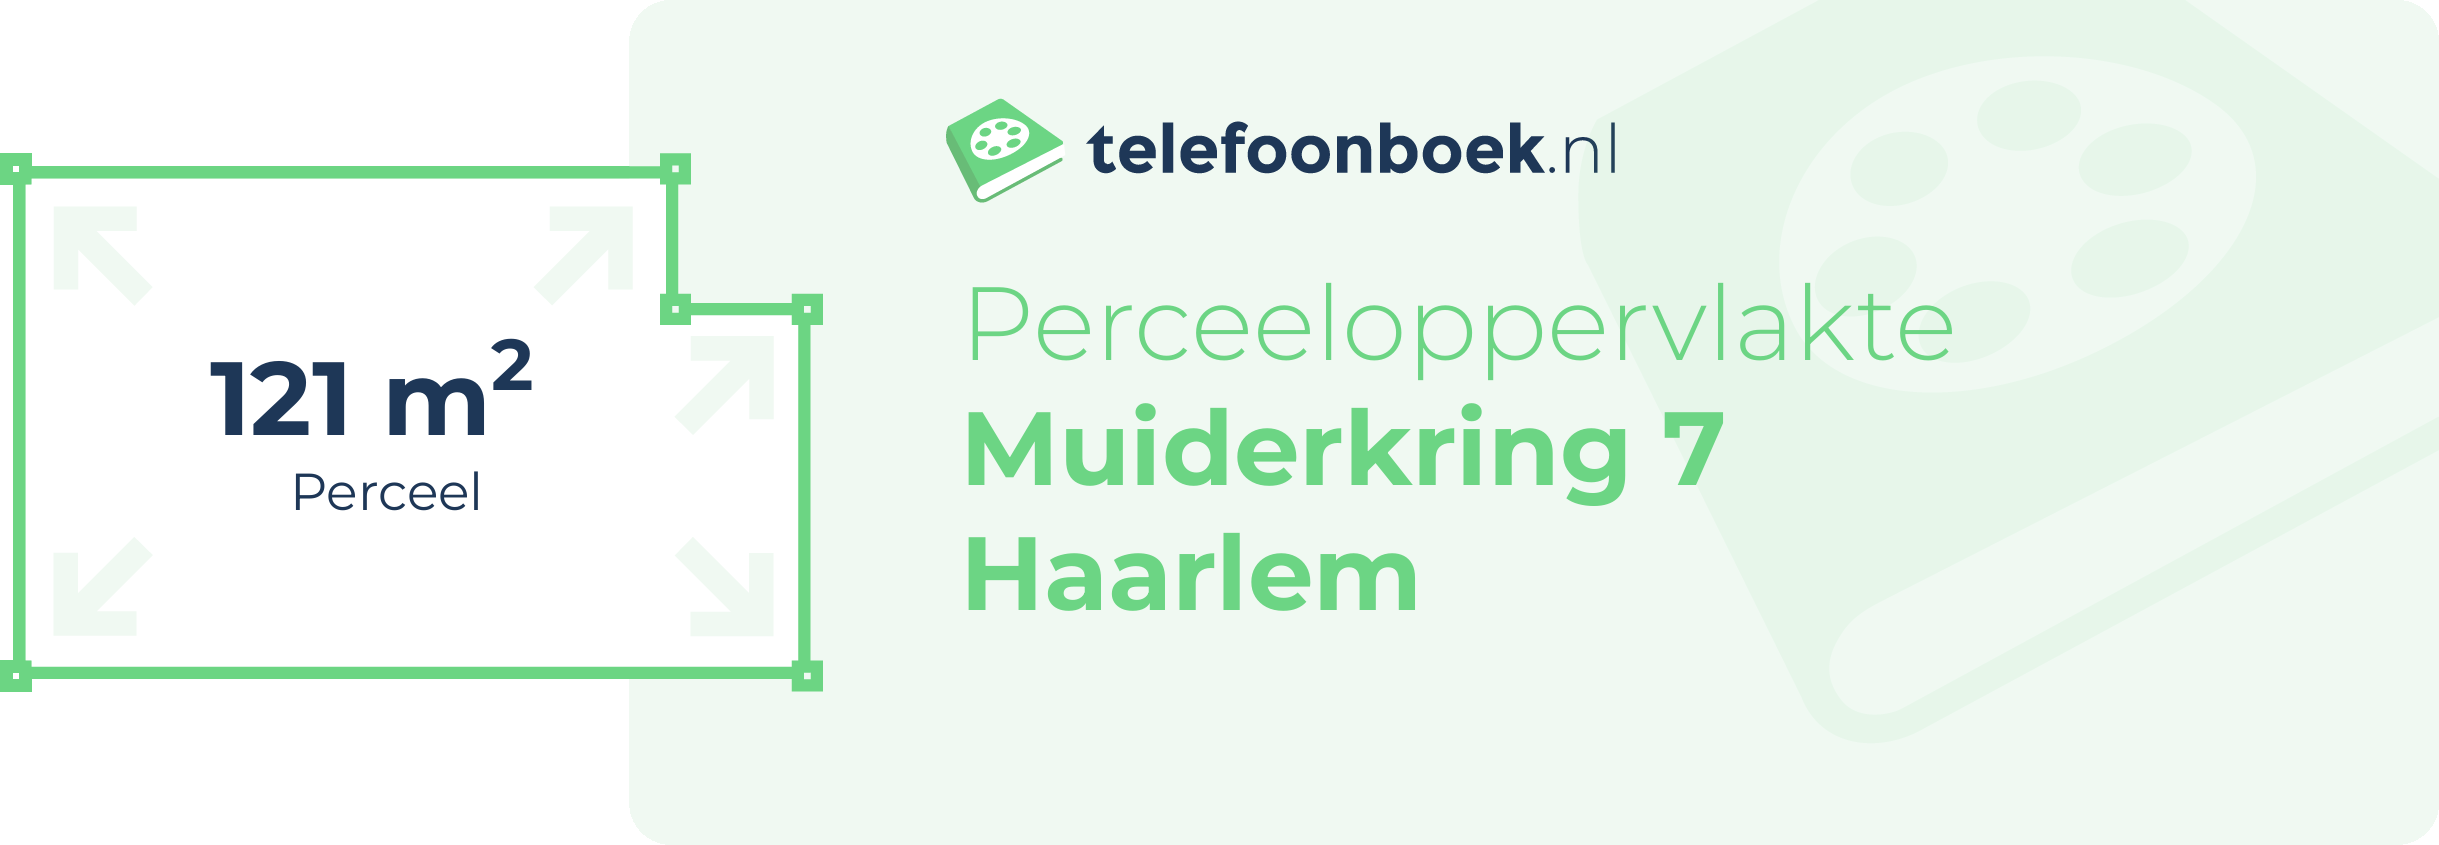 Perceeloppervlakte Muiderkring 7 Haarlem